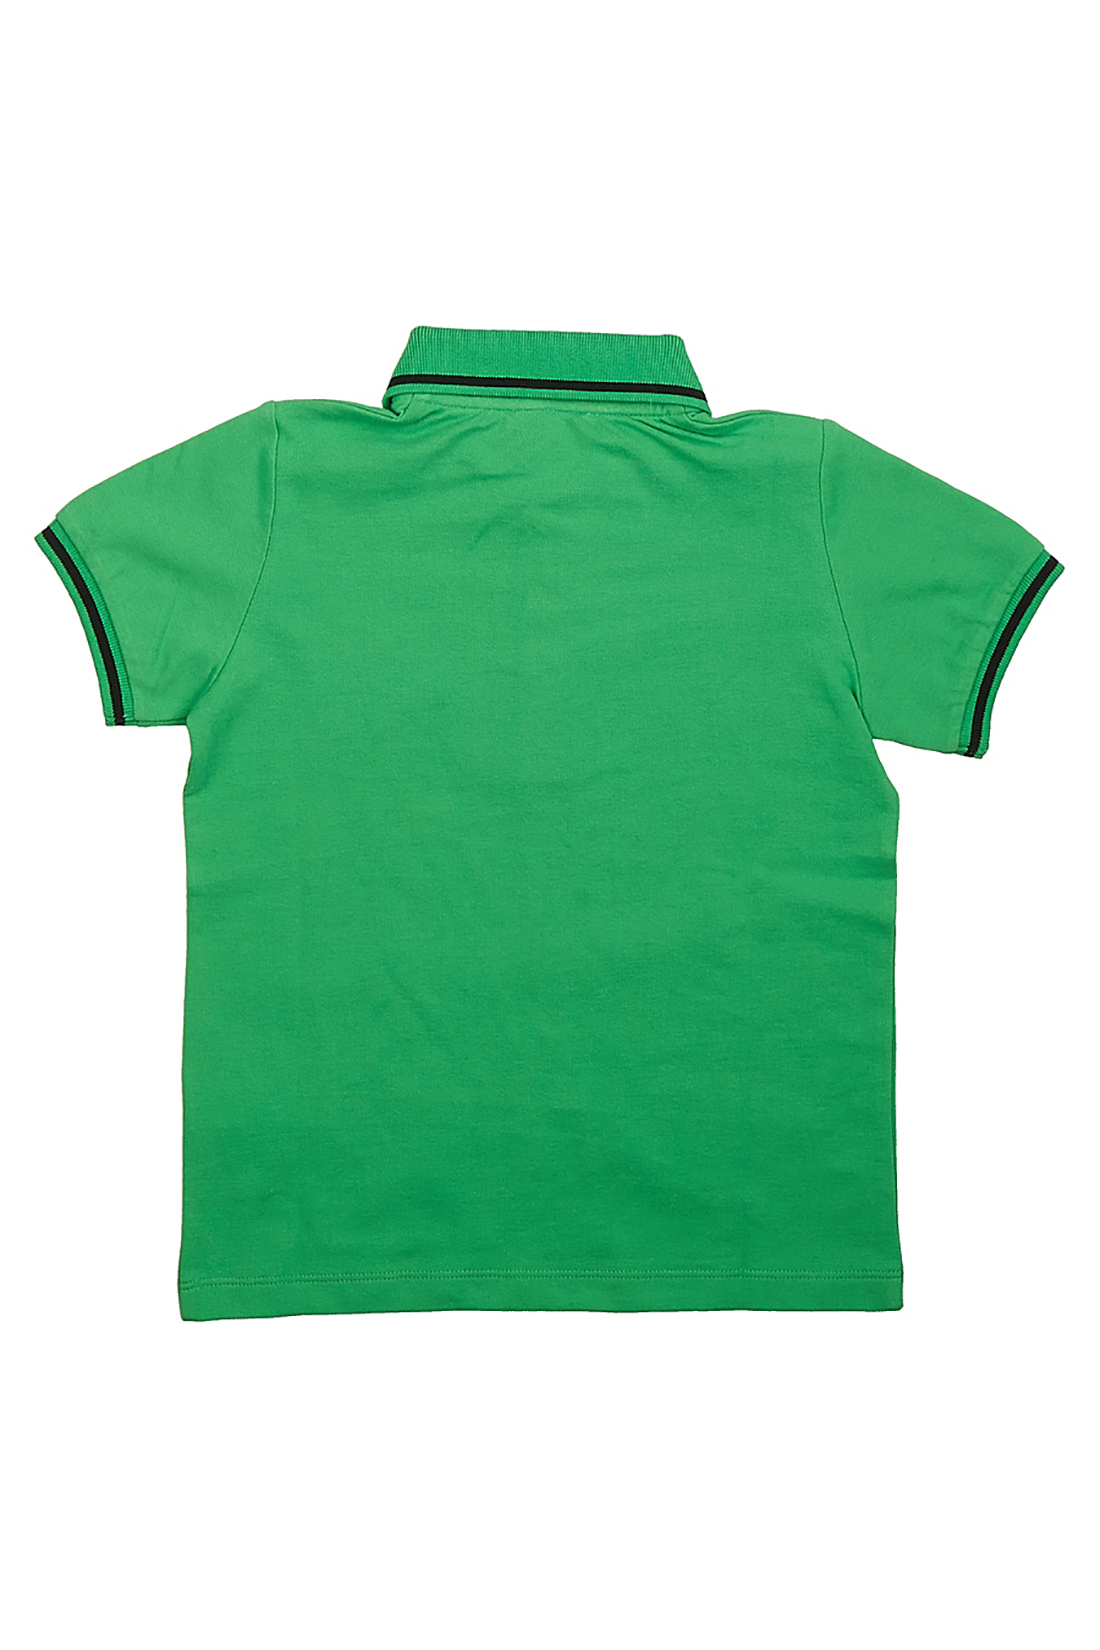 Поло для мальчика (арт. baon BK708002), размер 98-104, цвет зеленый Поло для мальчика (арт. baon BK708002) - фото 3